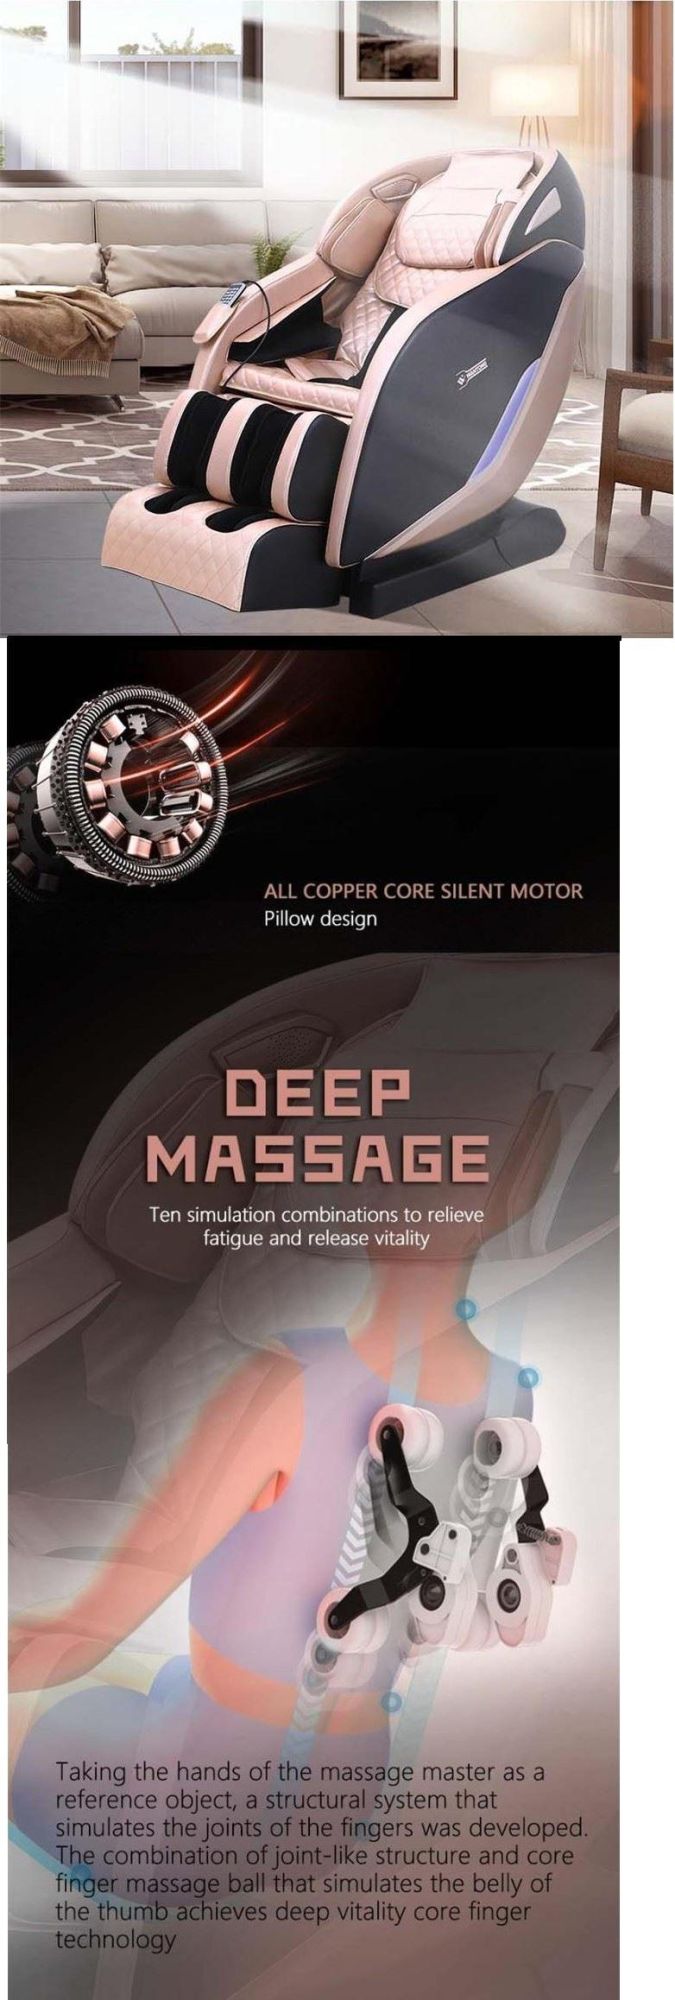 Electric Full Body Massager Vibration Air Squeezing Shiatsu L Track Massage Chair